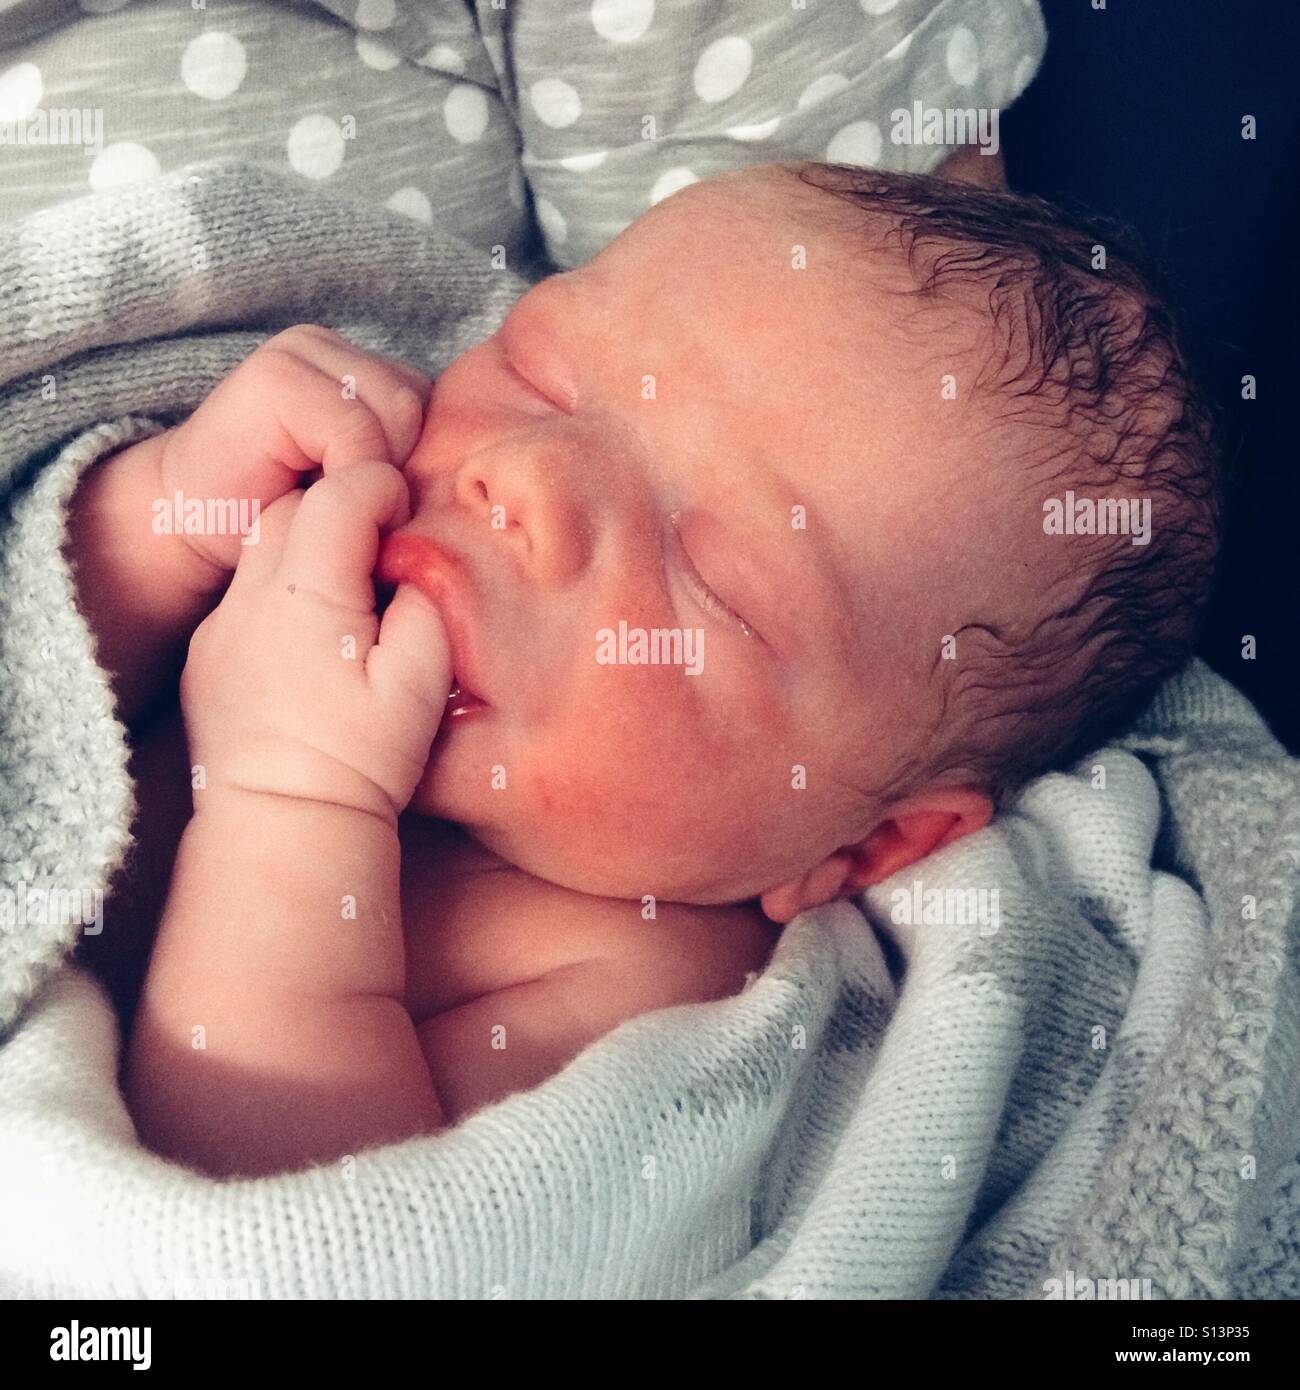 Newborn baby boy wrapped in blankets Stock Photo